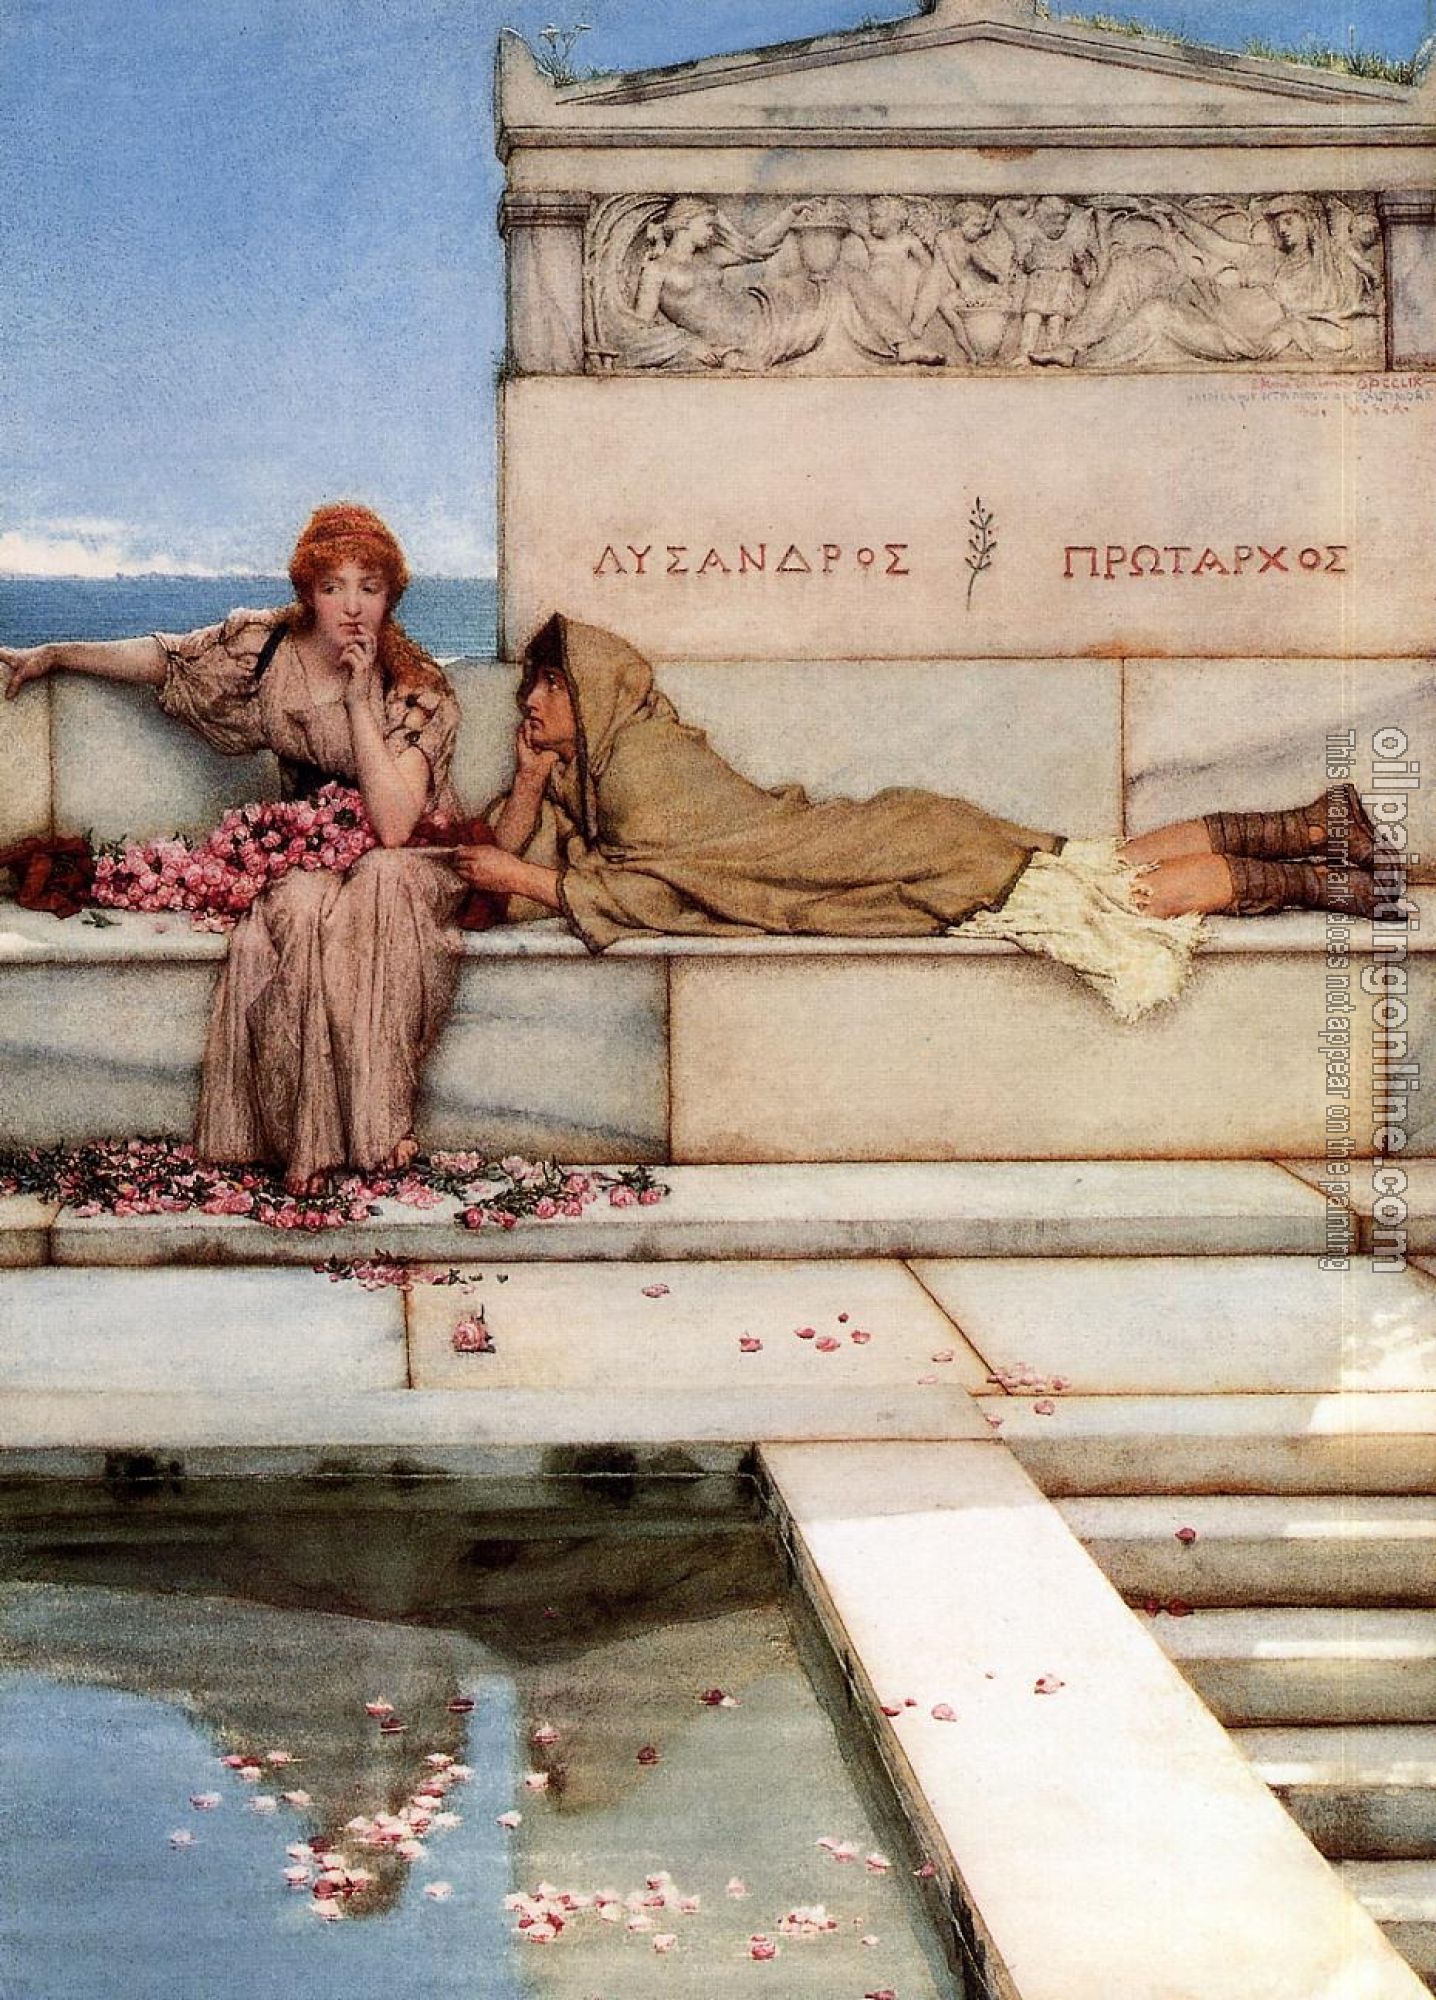 Alma-Tadema, Sir Lawrence - Xanthe and Phaon